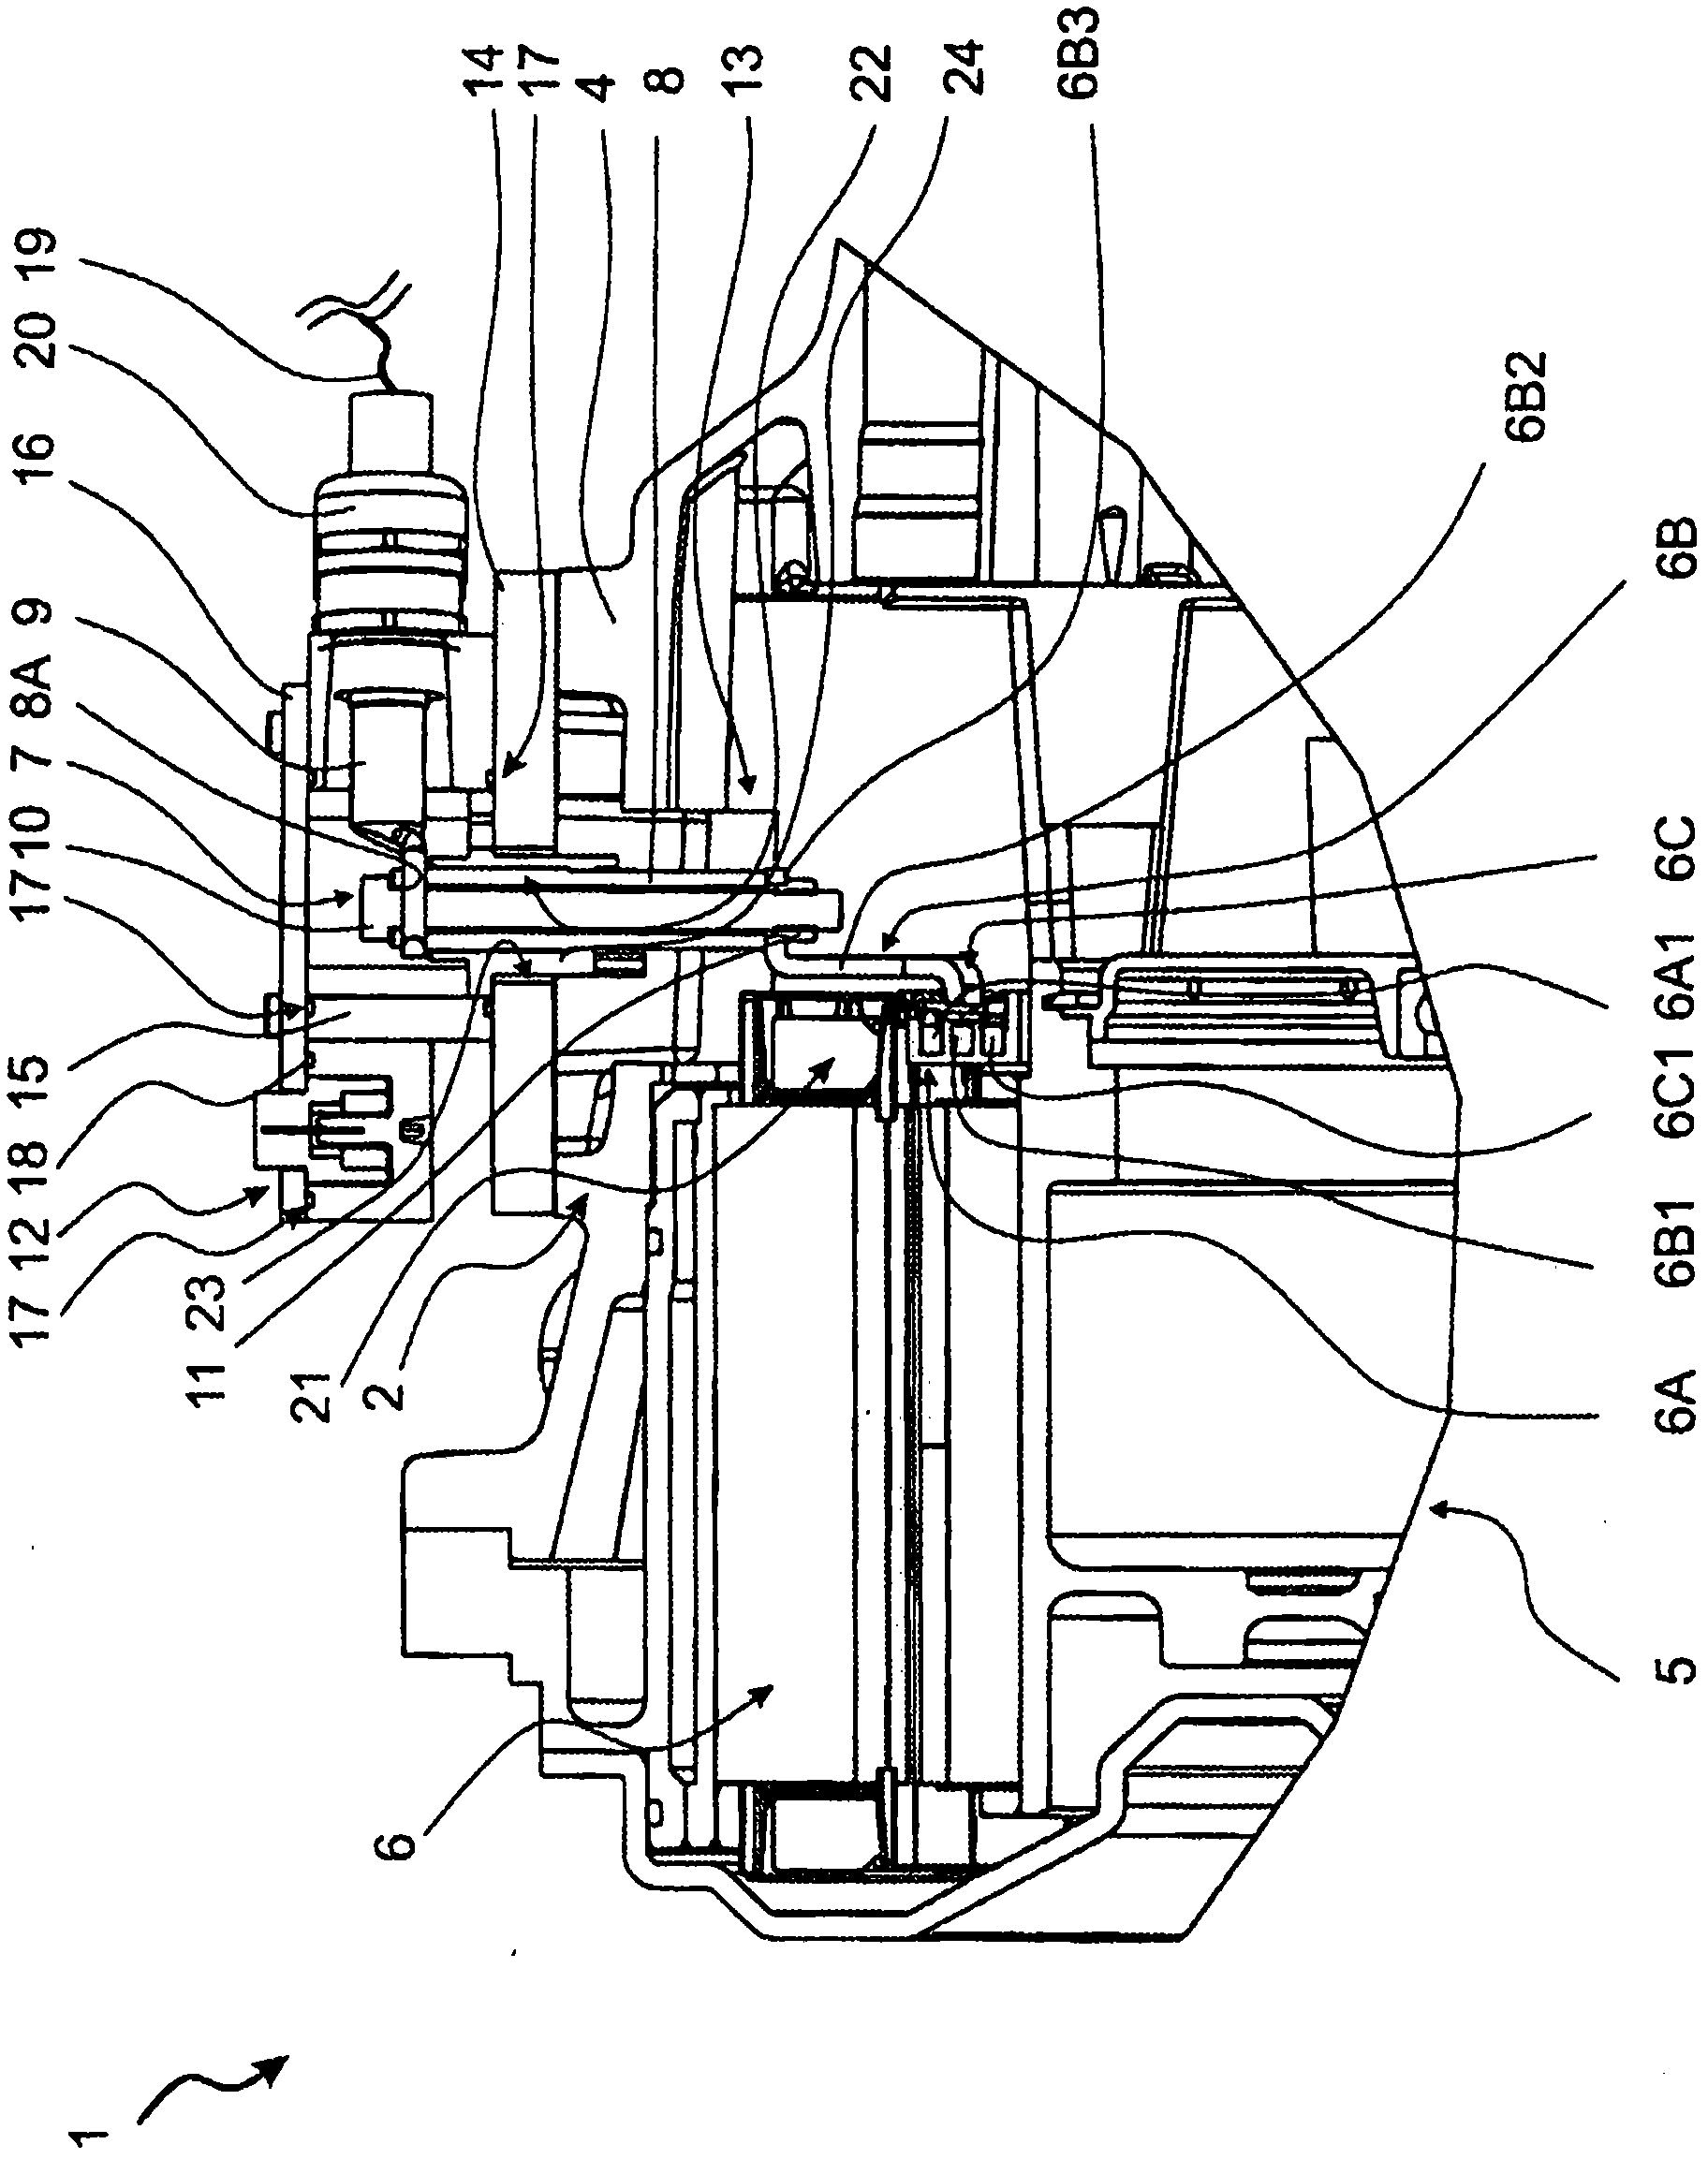 Transmission device comprising a transmission housing